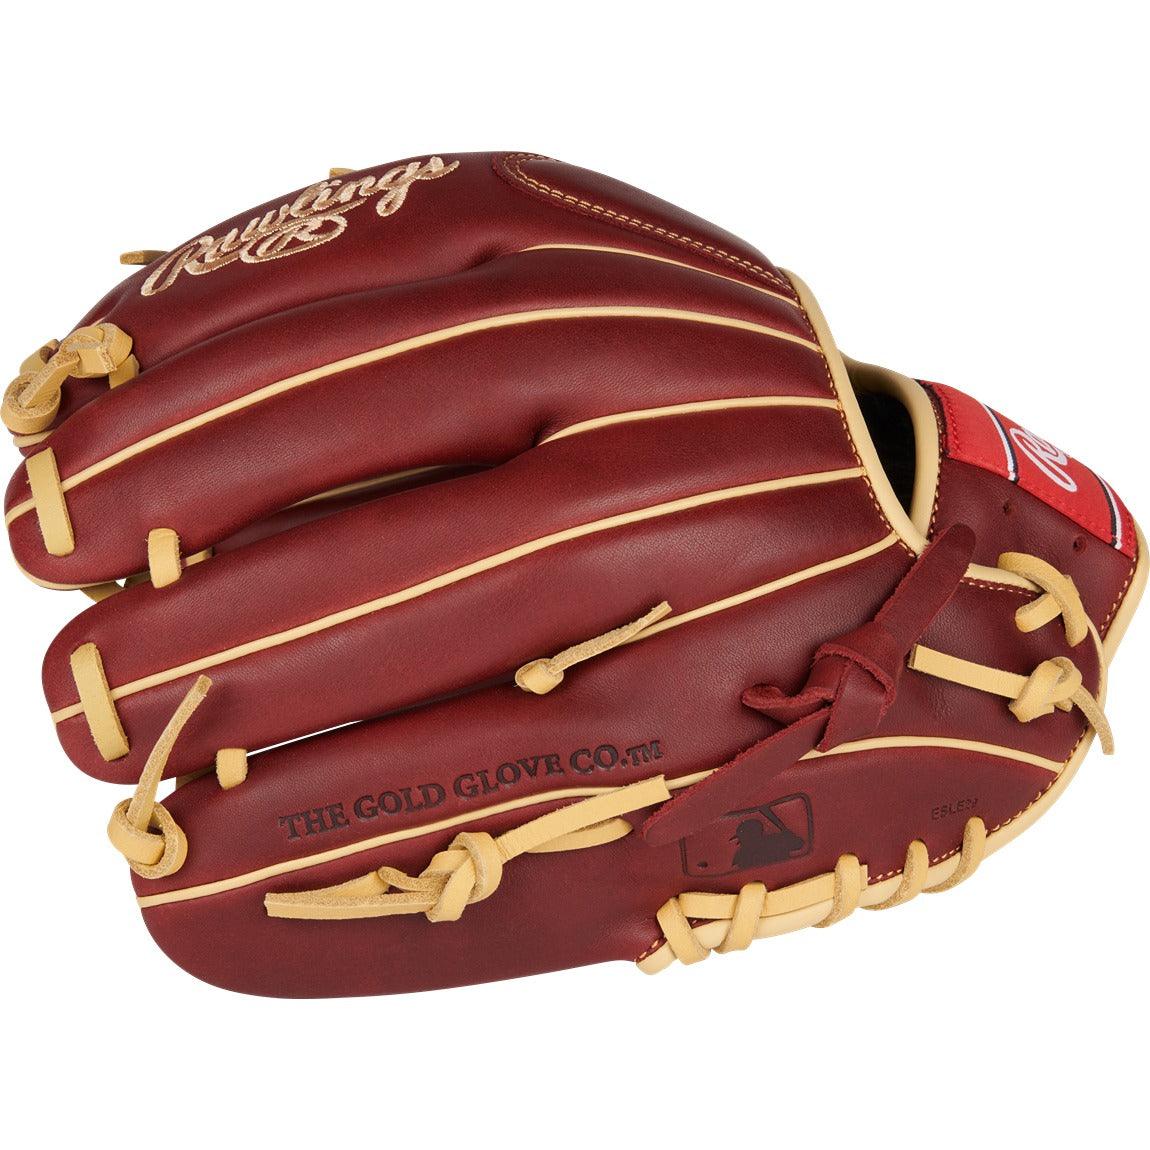 Sandlot 11.75" Baseball Glove - Sports Excellence